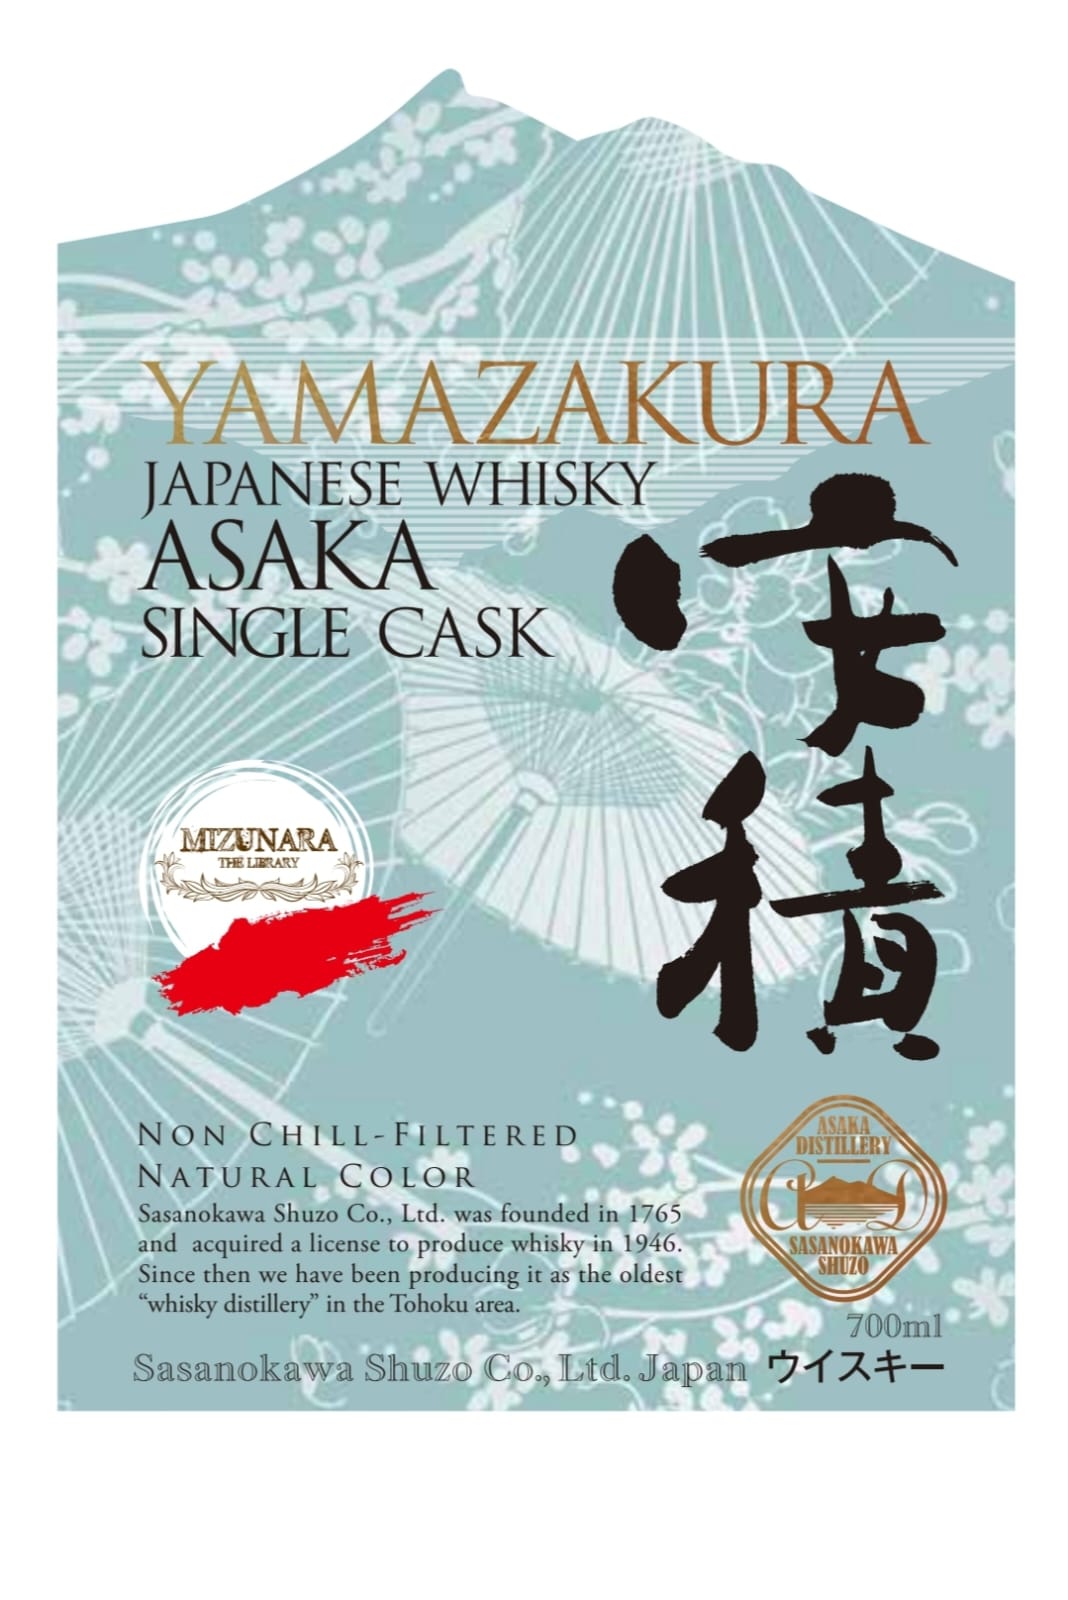 Yamazakura ASAKA Distillery "Mizunara Private Single Cask" Single Malt Japanese Whisky - 0